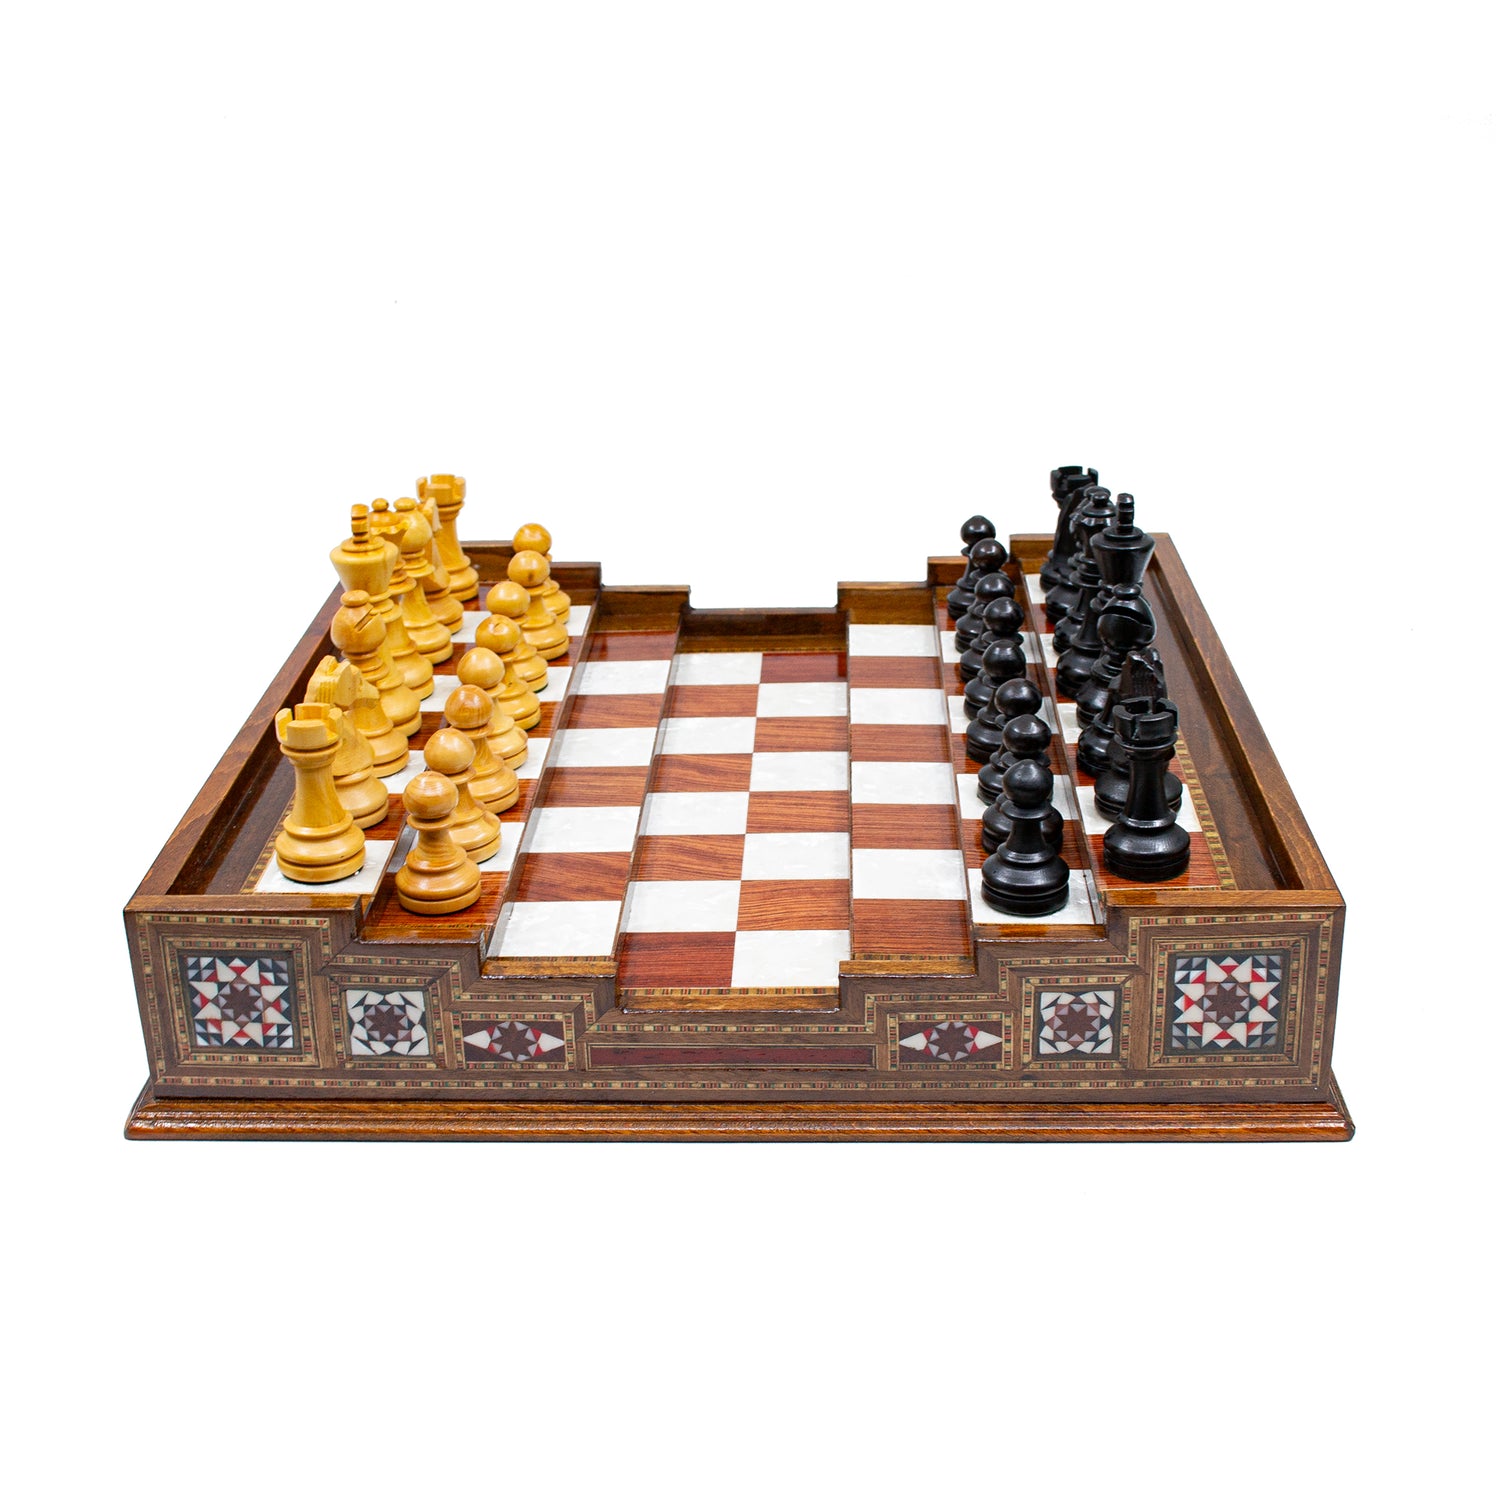 Arena Grandmaster Chess Board: Distinctive Staunton Pieces - Ketohandcraft